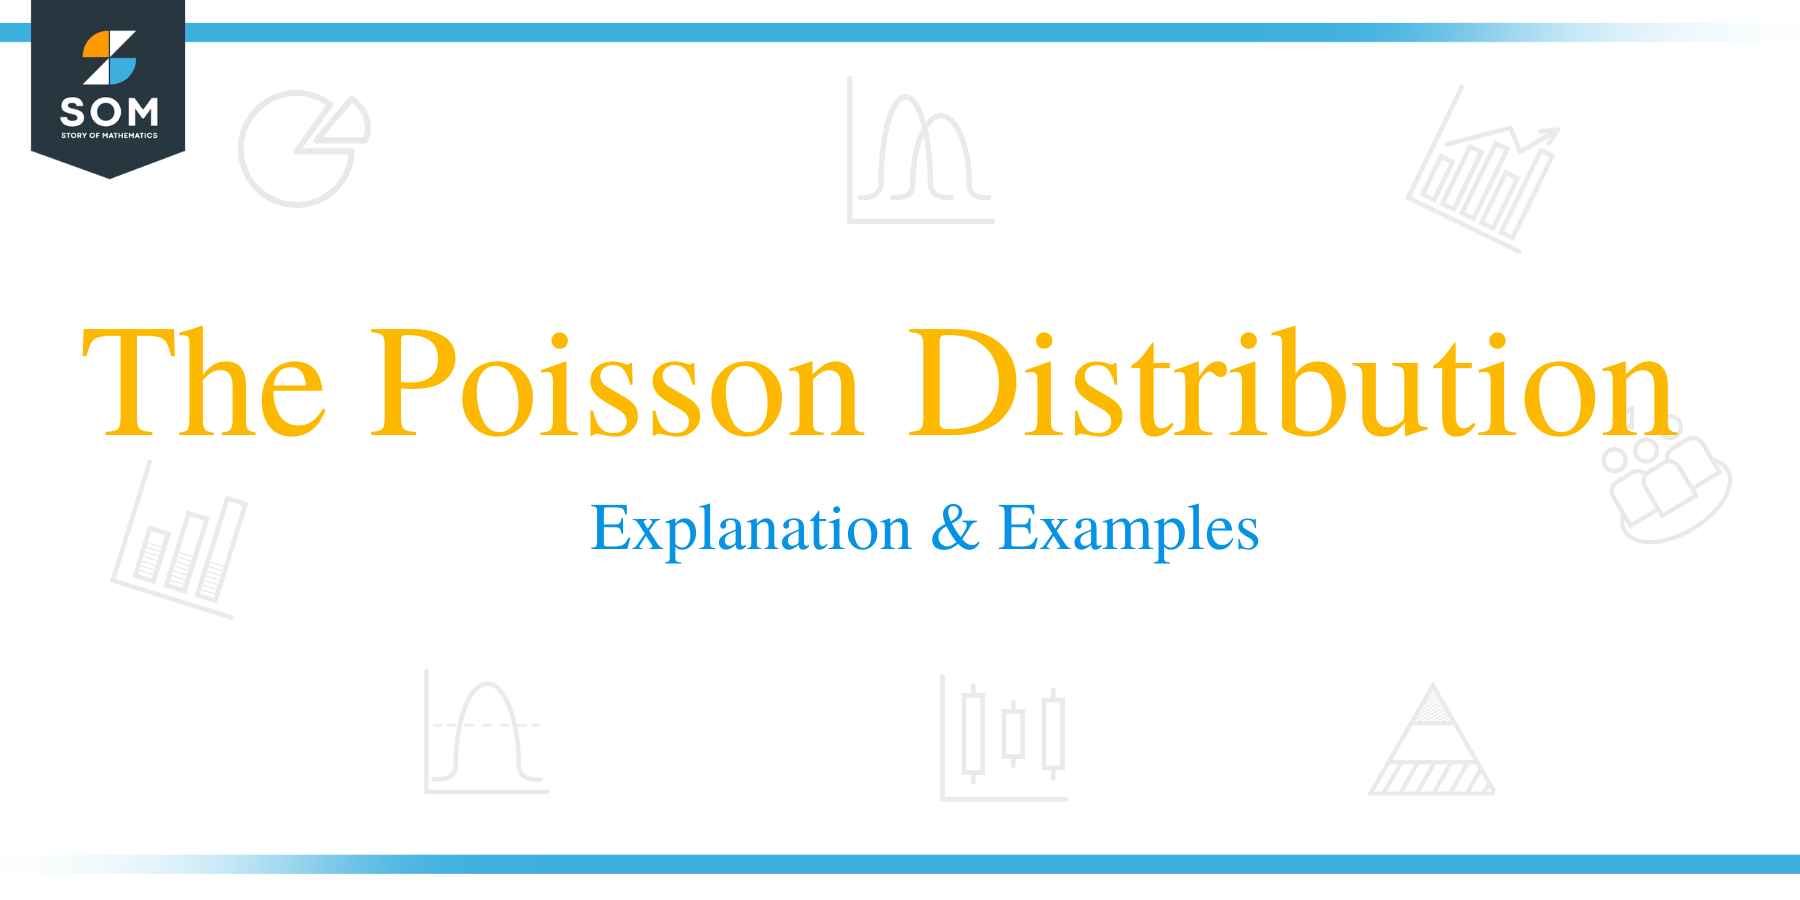 The Poisson Distribution